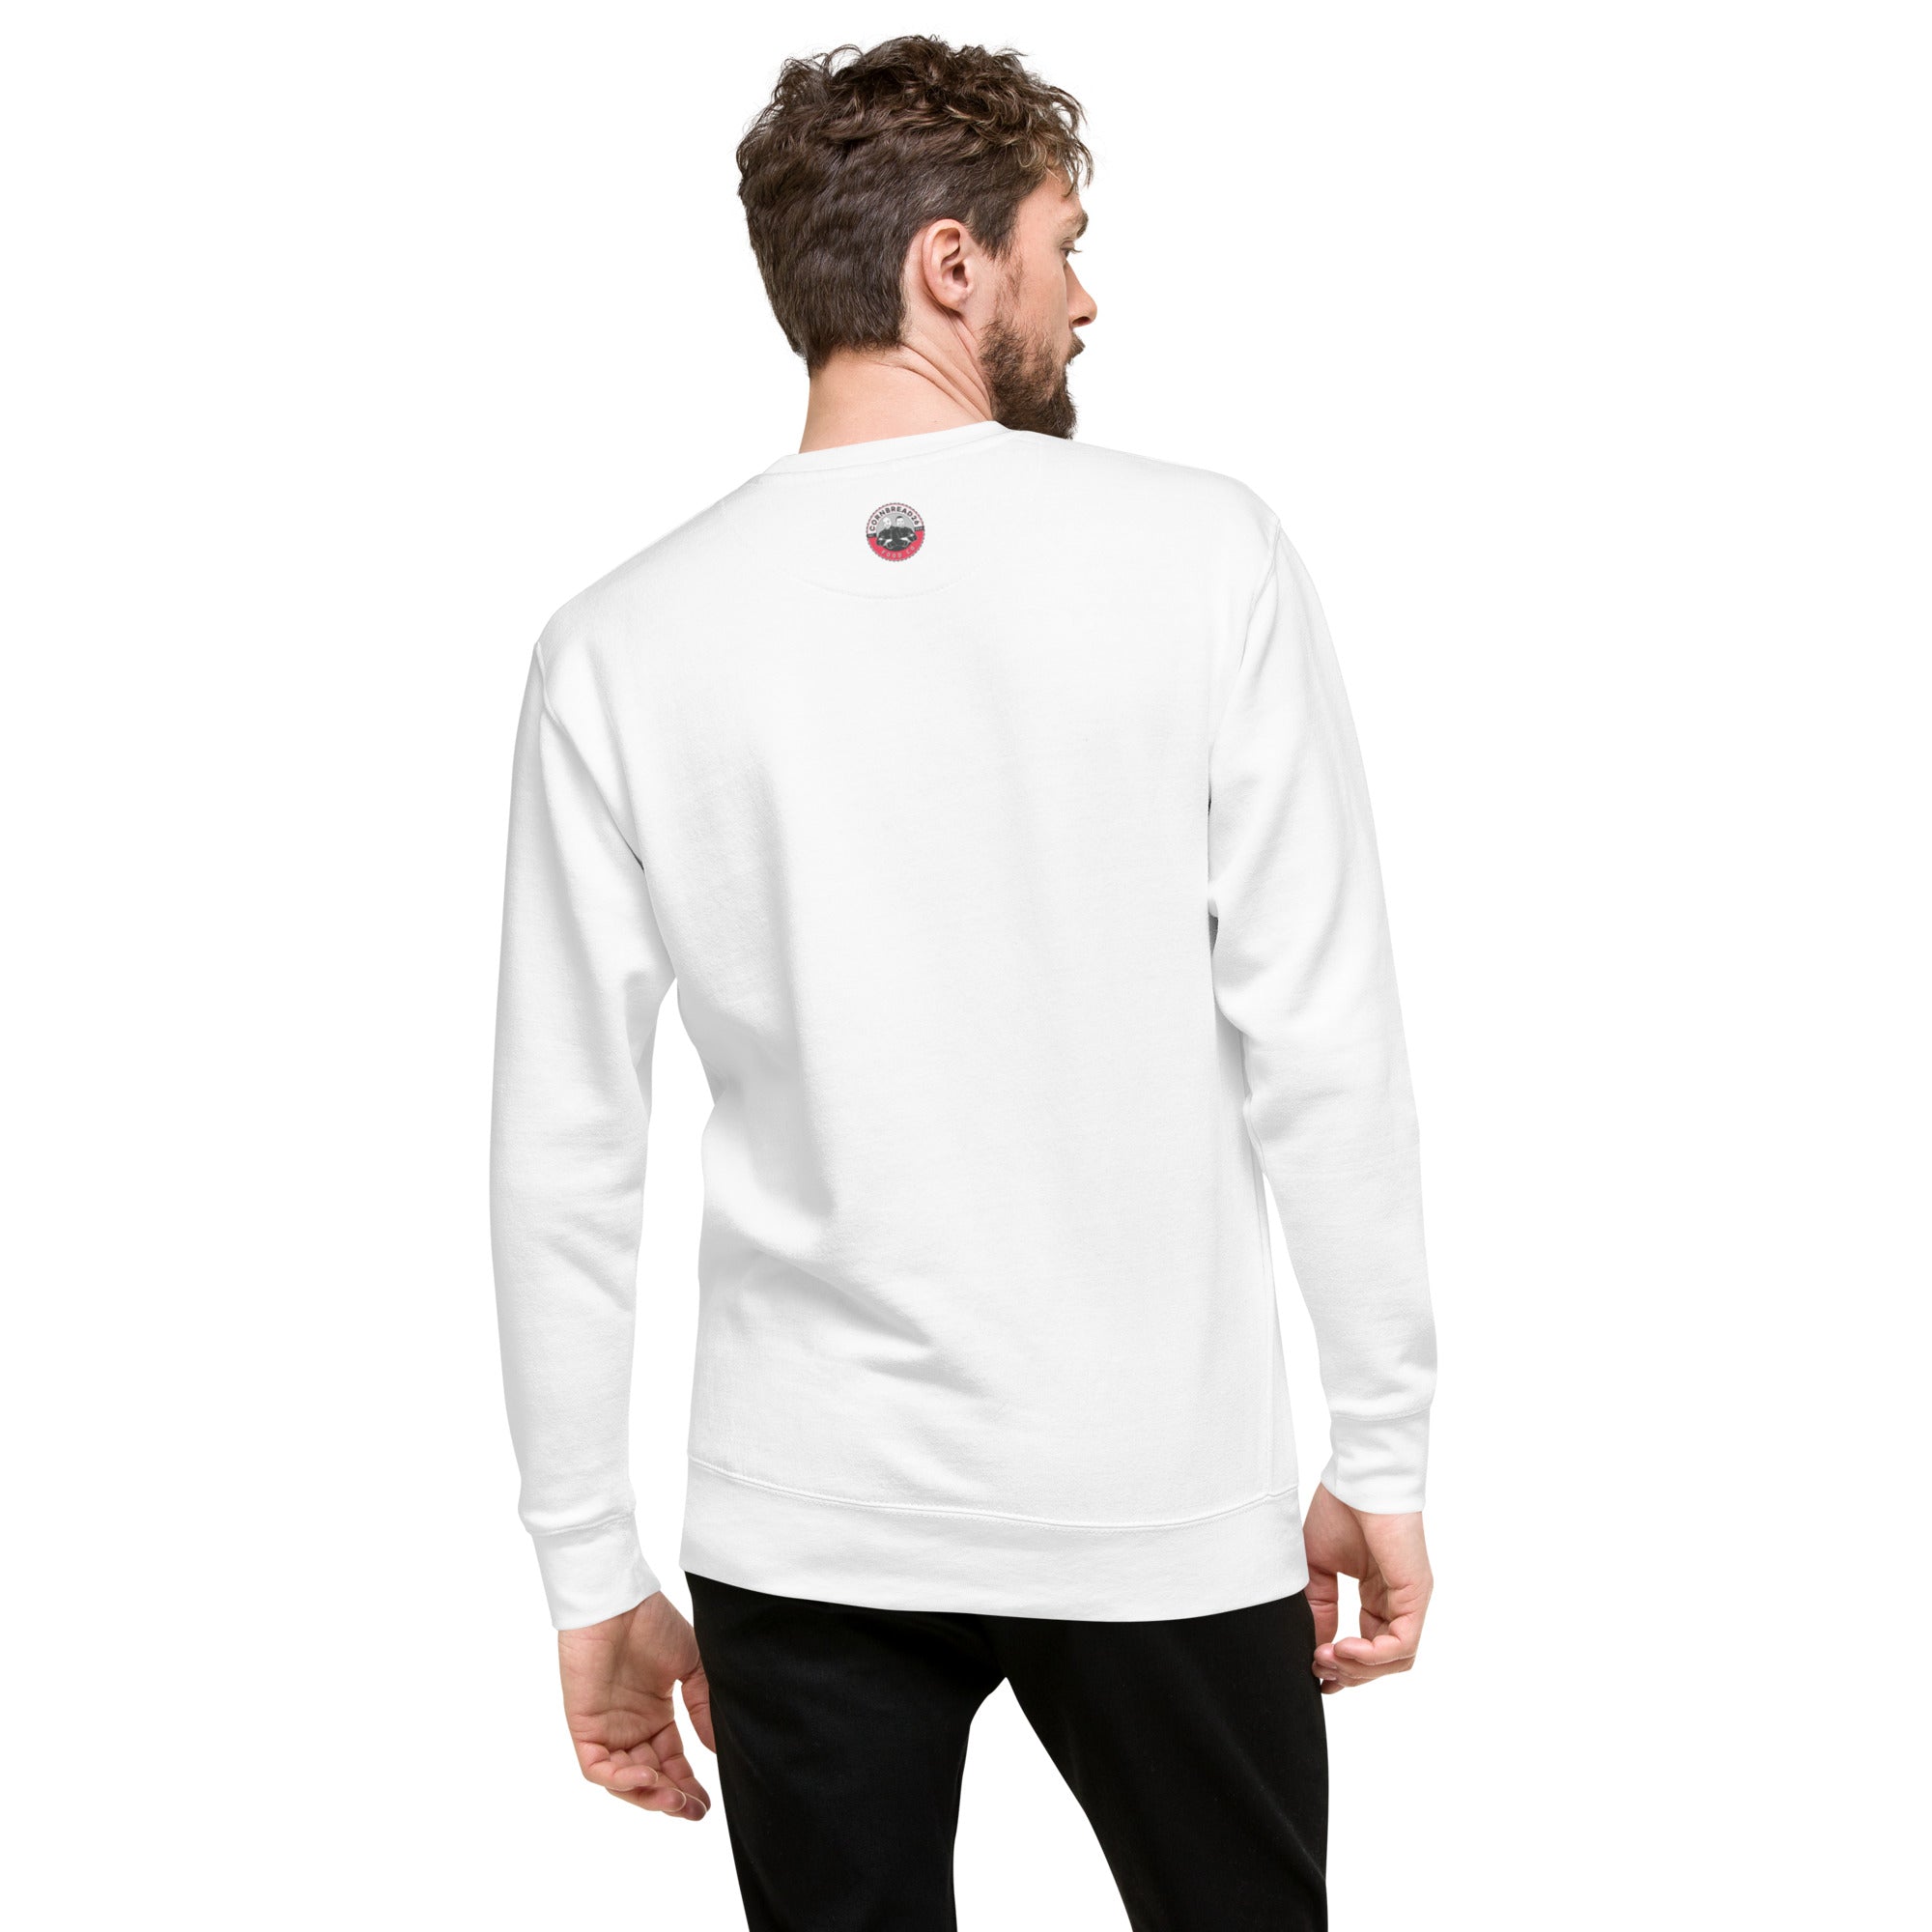 Unisex Classic Logo Stitched Premium Sweatshirt - THE CORNBREAD KITCHEN SHOP